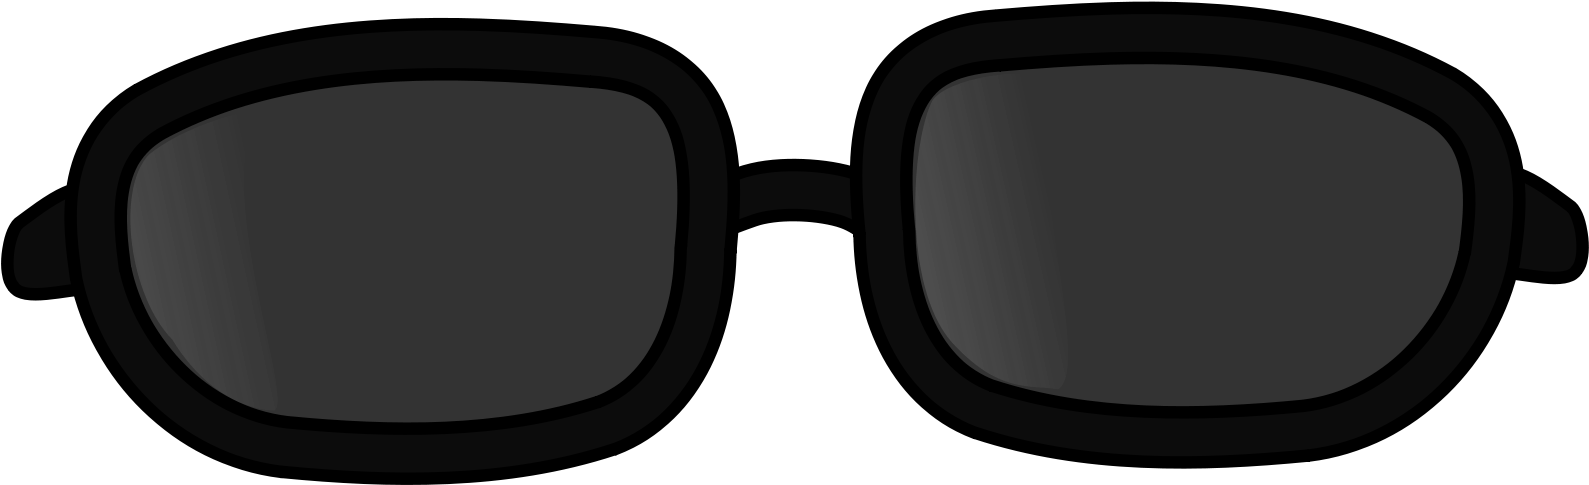 A Black Sunglasses On A Black Background